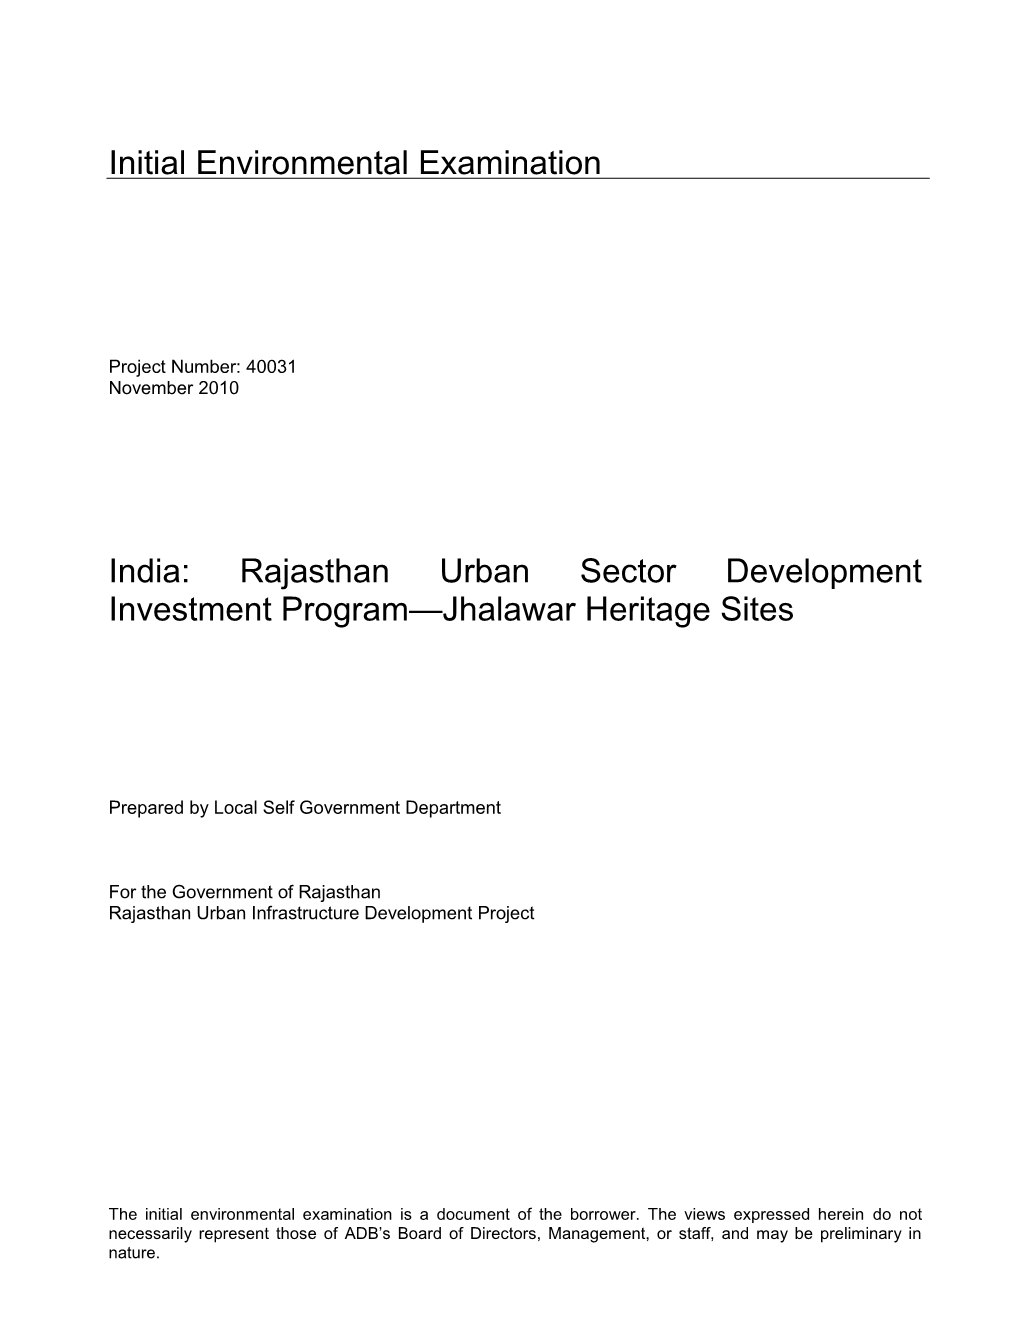 IEE: India: Jhalawar Heritage Sites